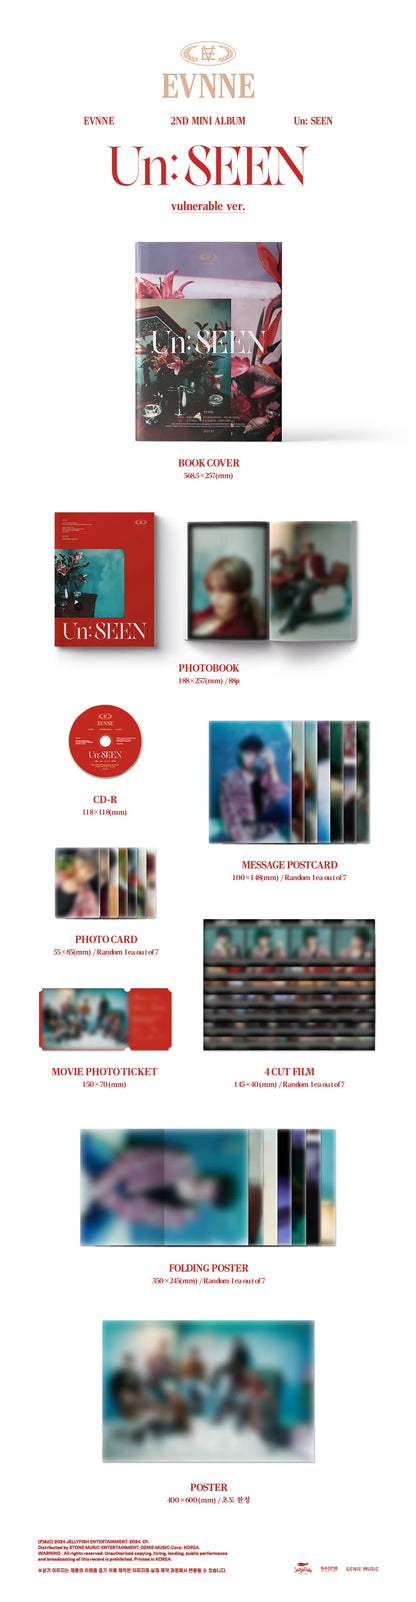 EVNNE - 2nd Mini-Album 'Un:SEEN' (Korean Version)